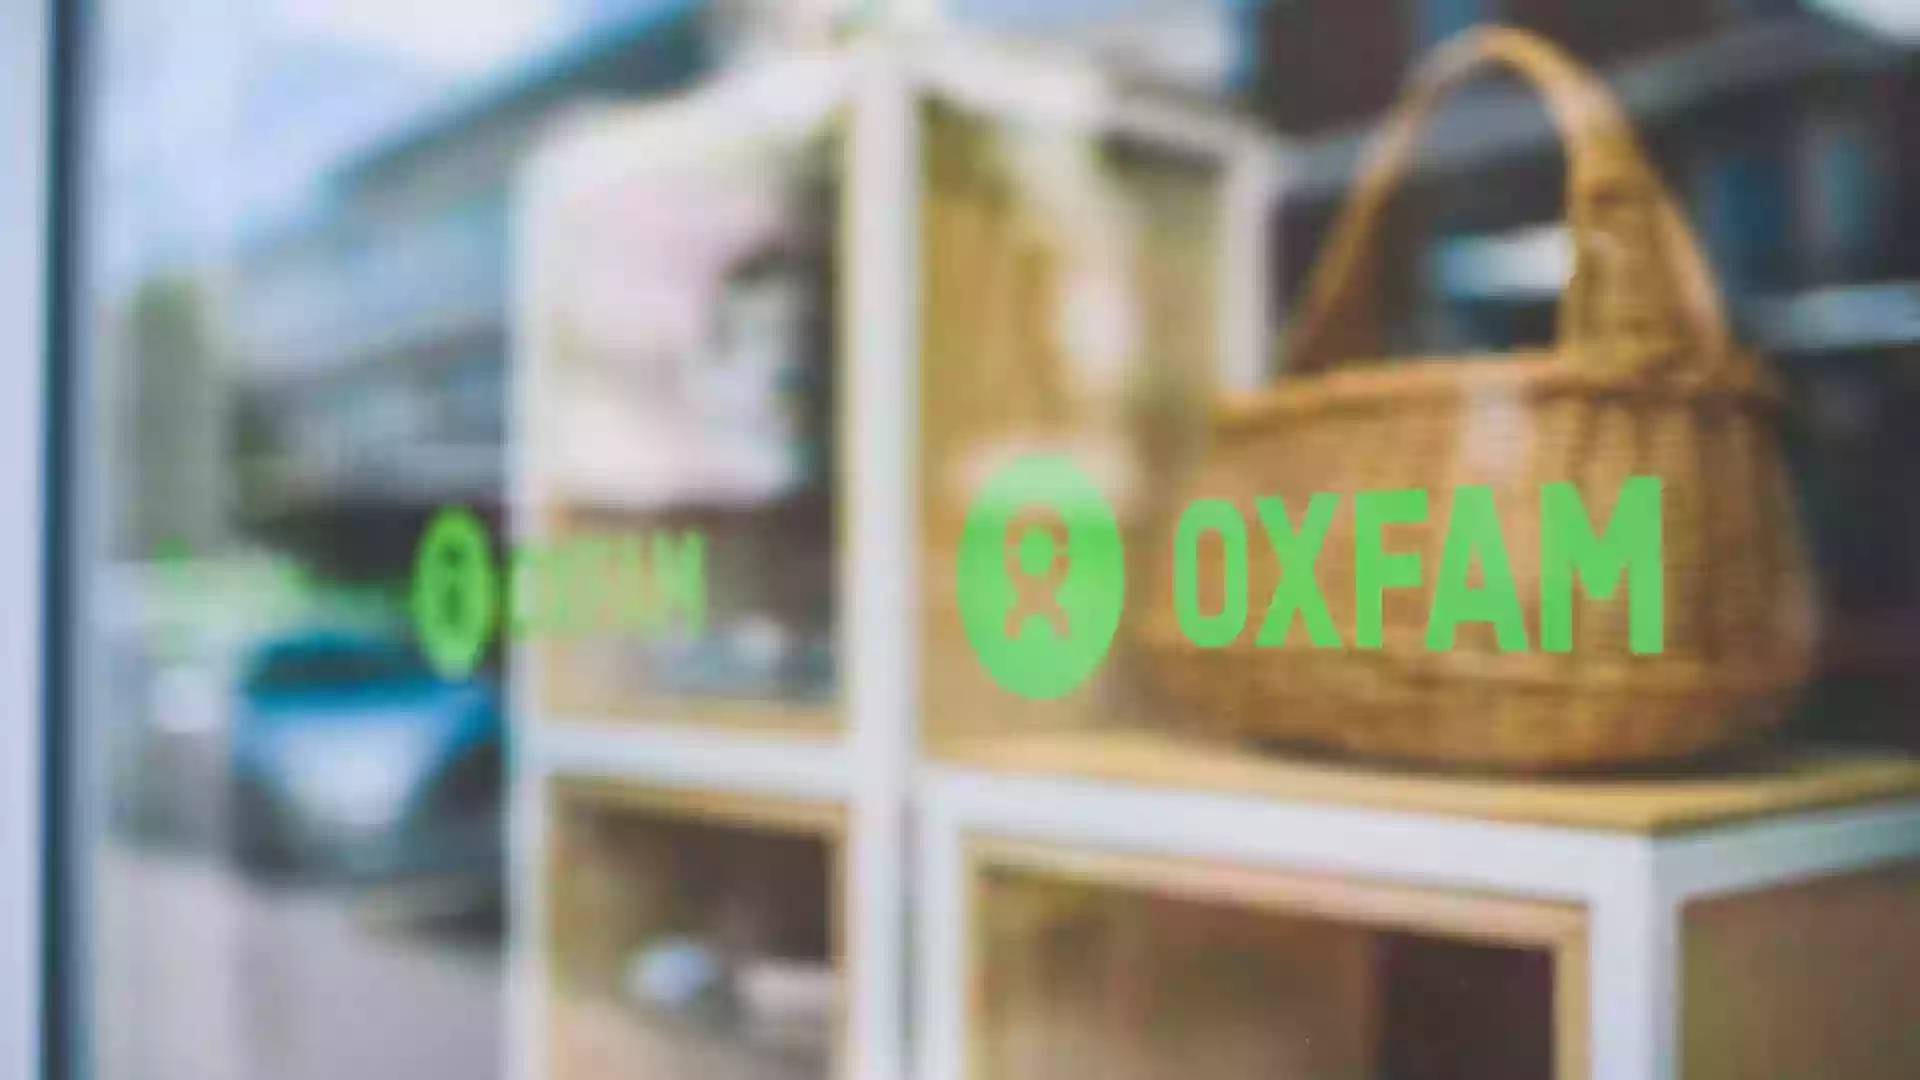 Oxfam Portlaoise